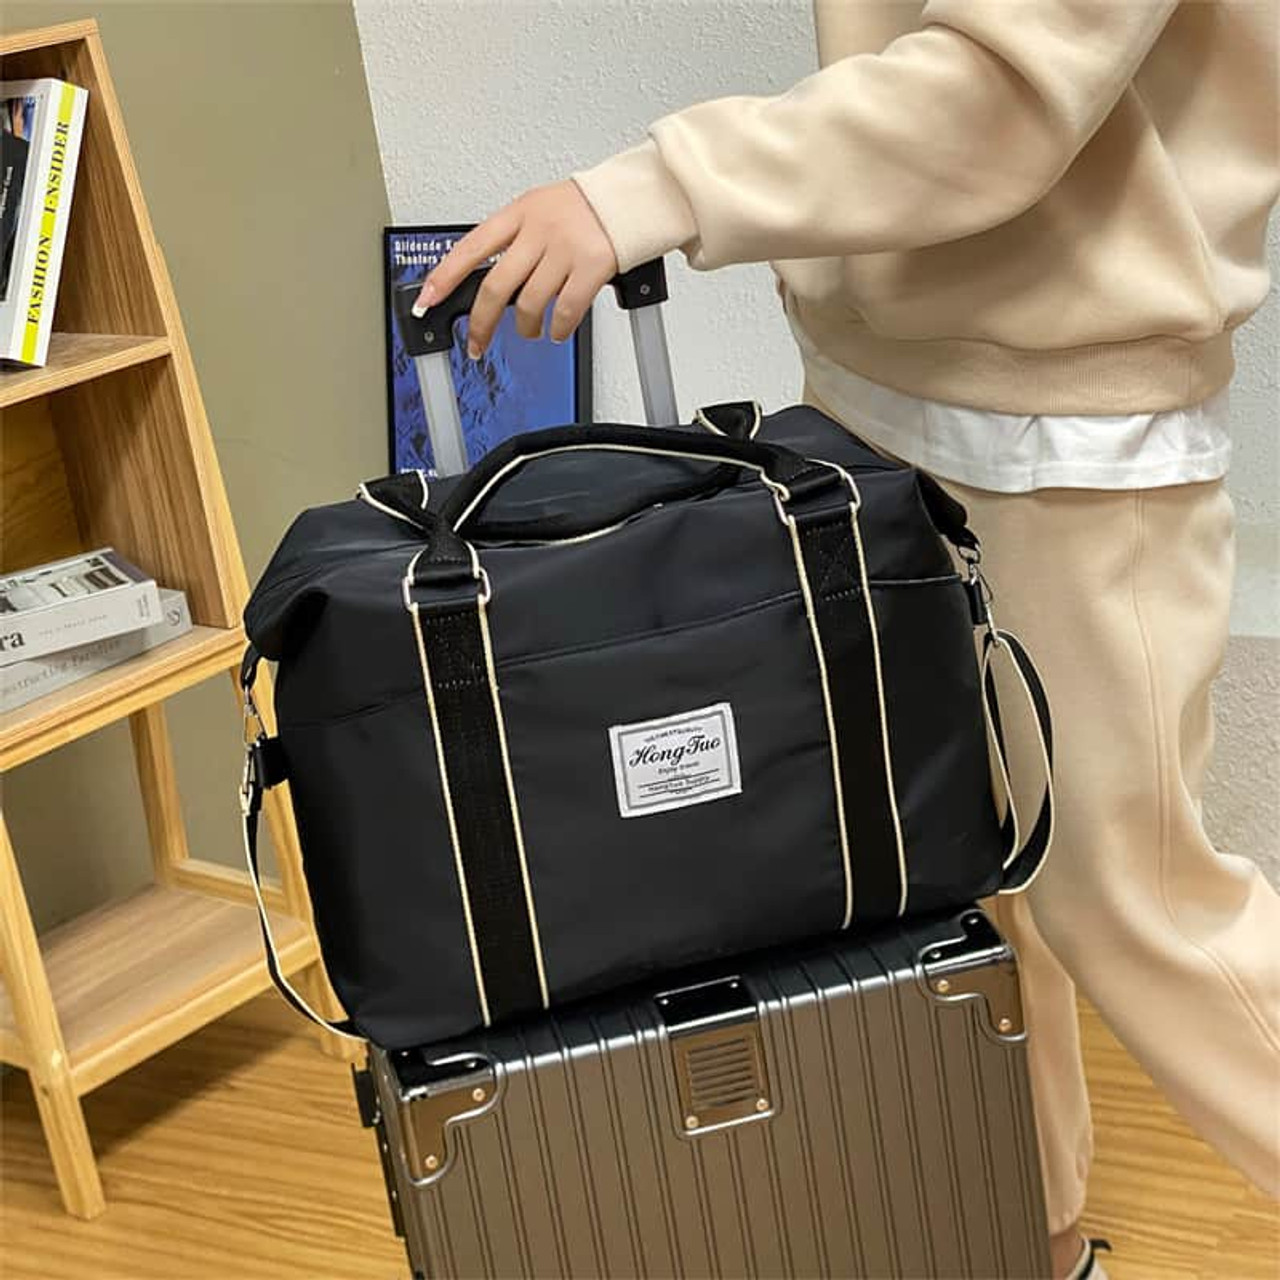 Portable Travel Bag Women's Large Capacity Lightweight Waterproof Luggage Bag